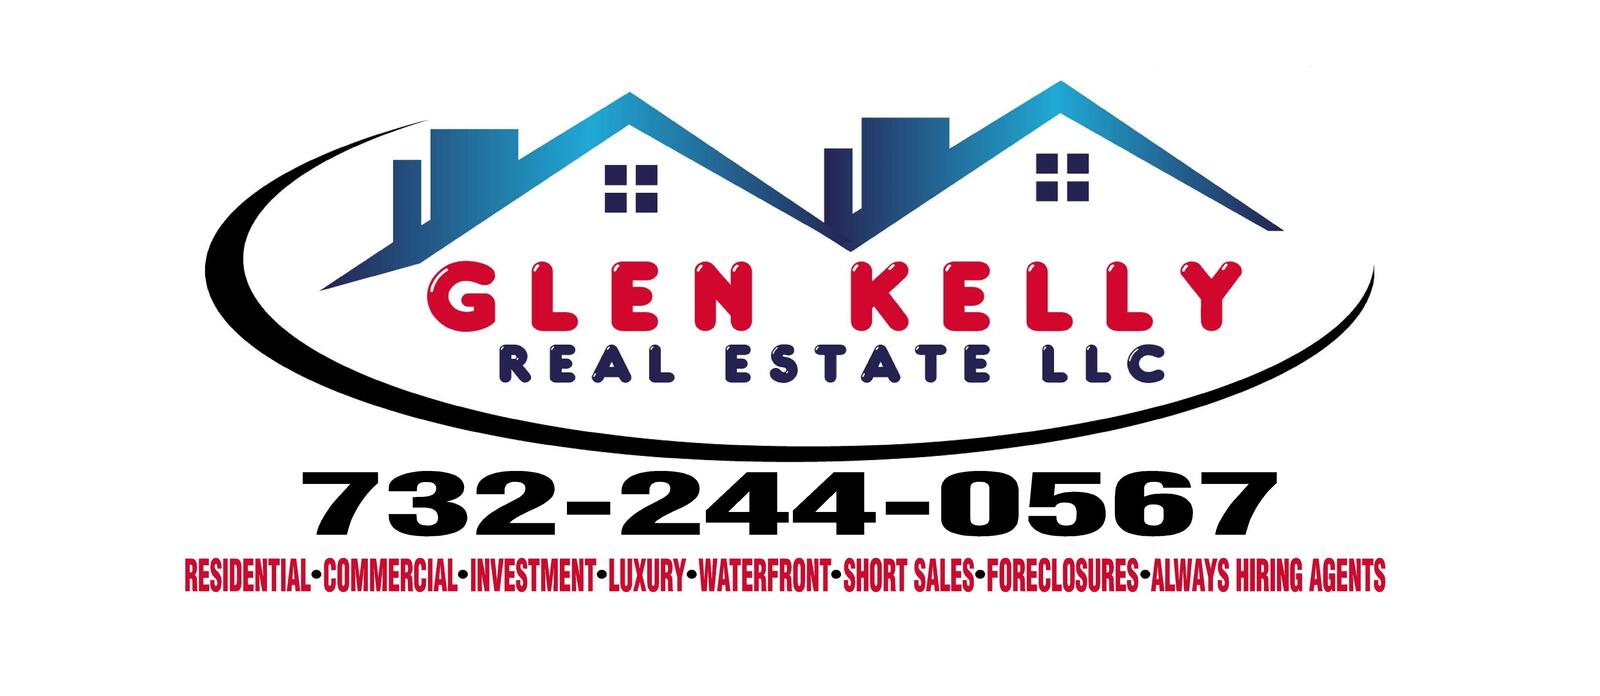 Glen Kelly Real Estate LLC Logo